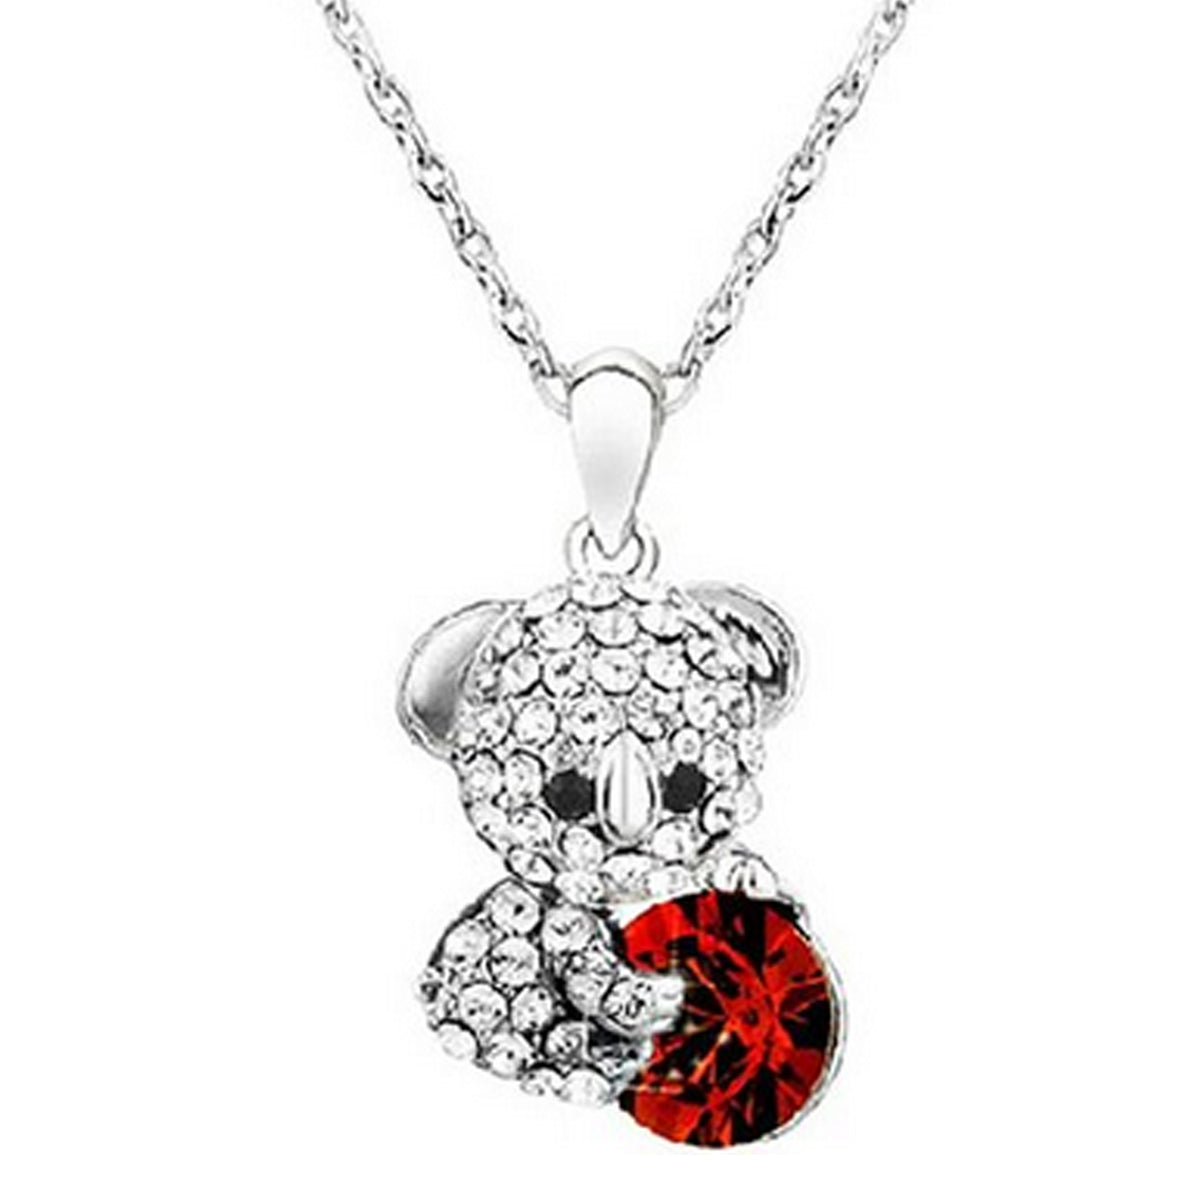 Wrapables Cute Teddy Bear Crystal Pendant Necklace